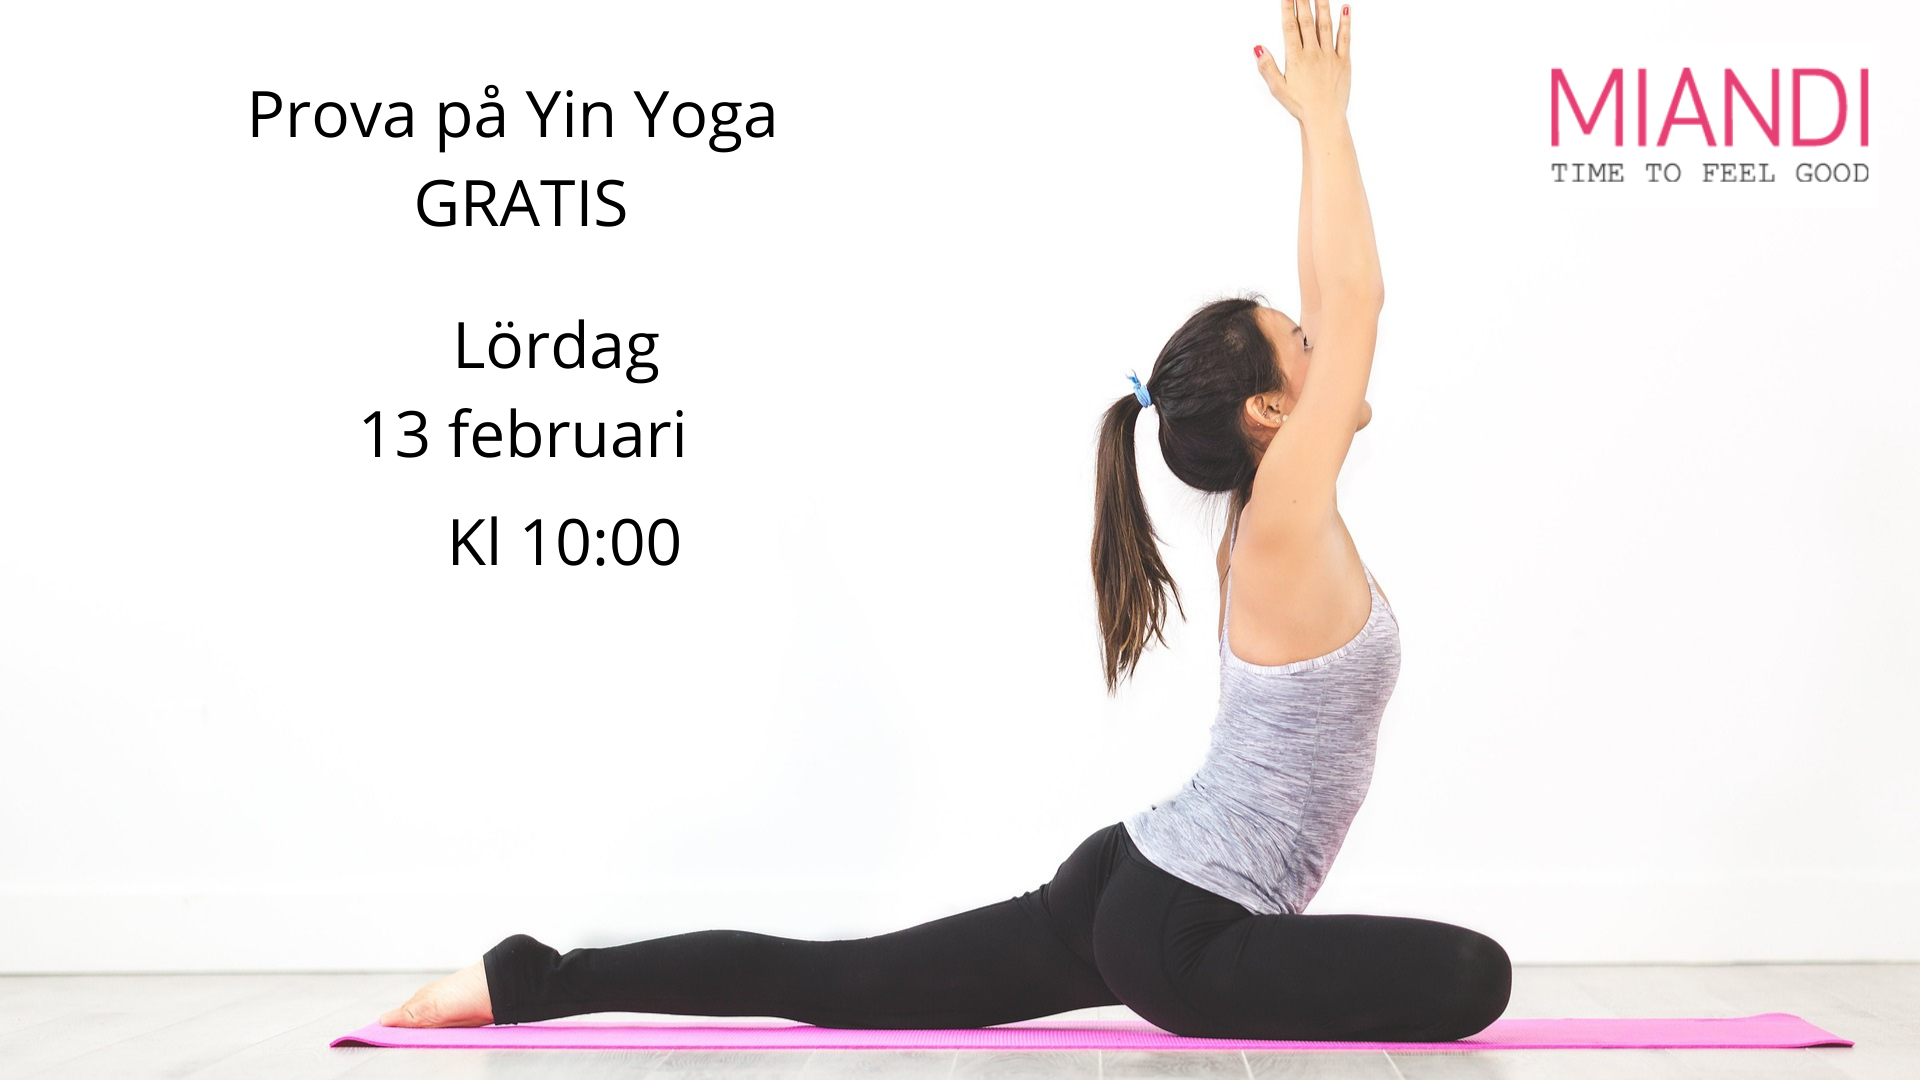 Prova på Yin Yoga gratis FULLBOKAT